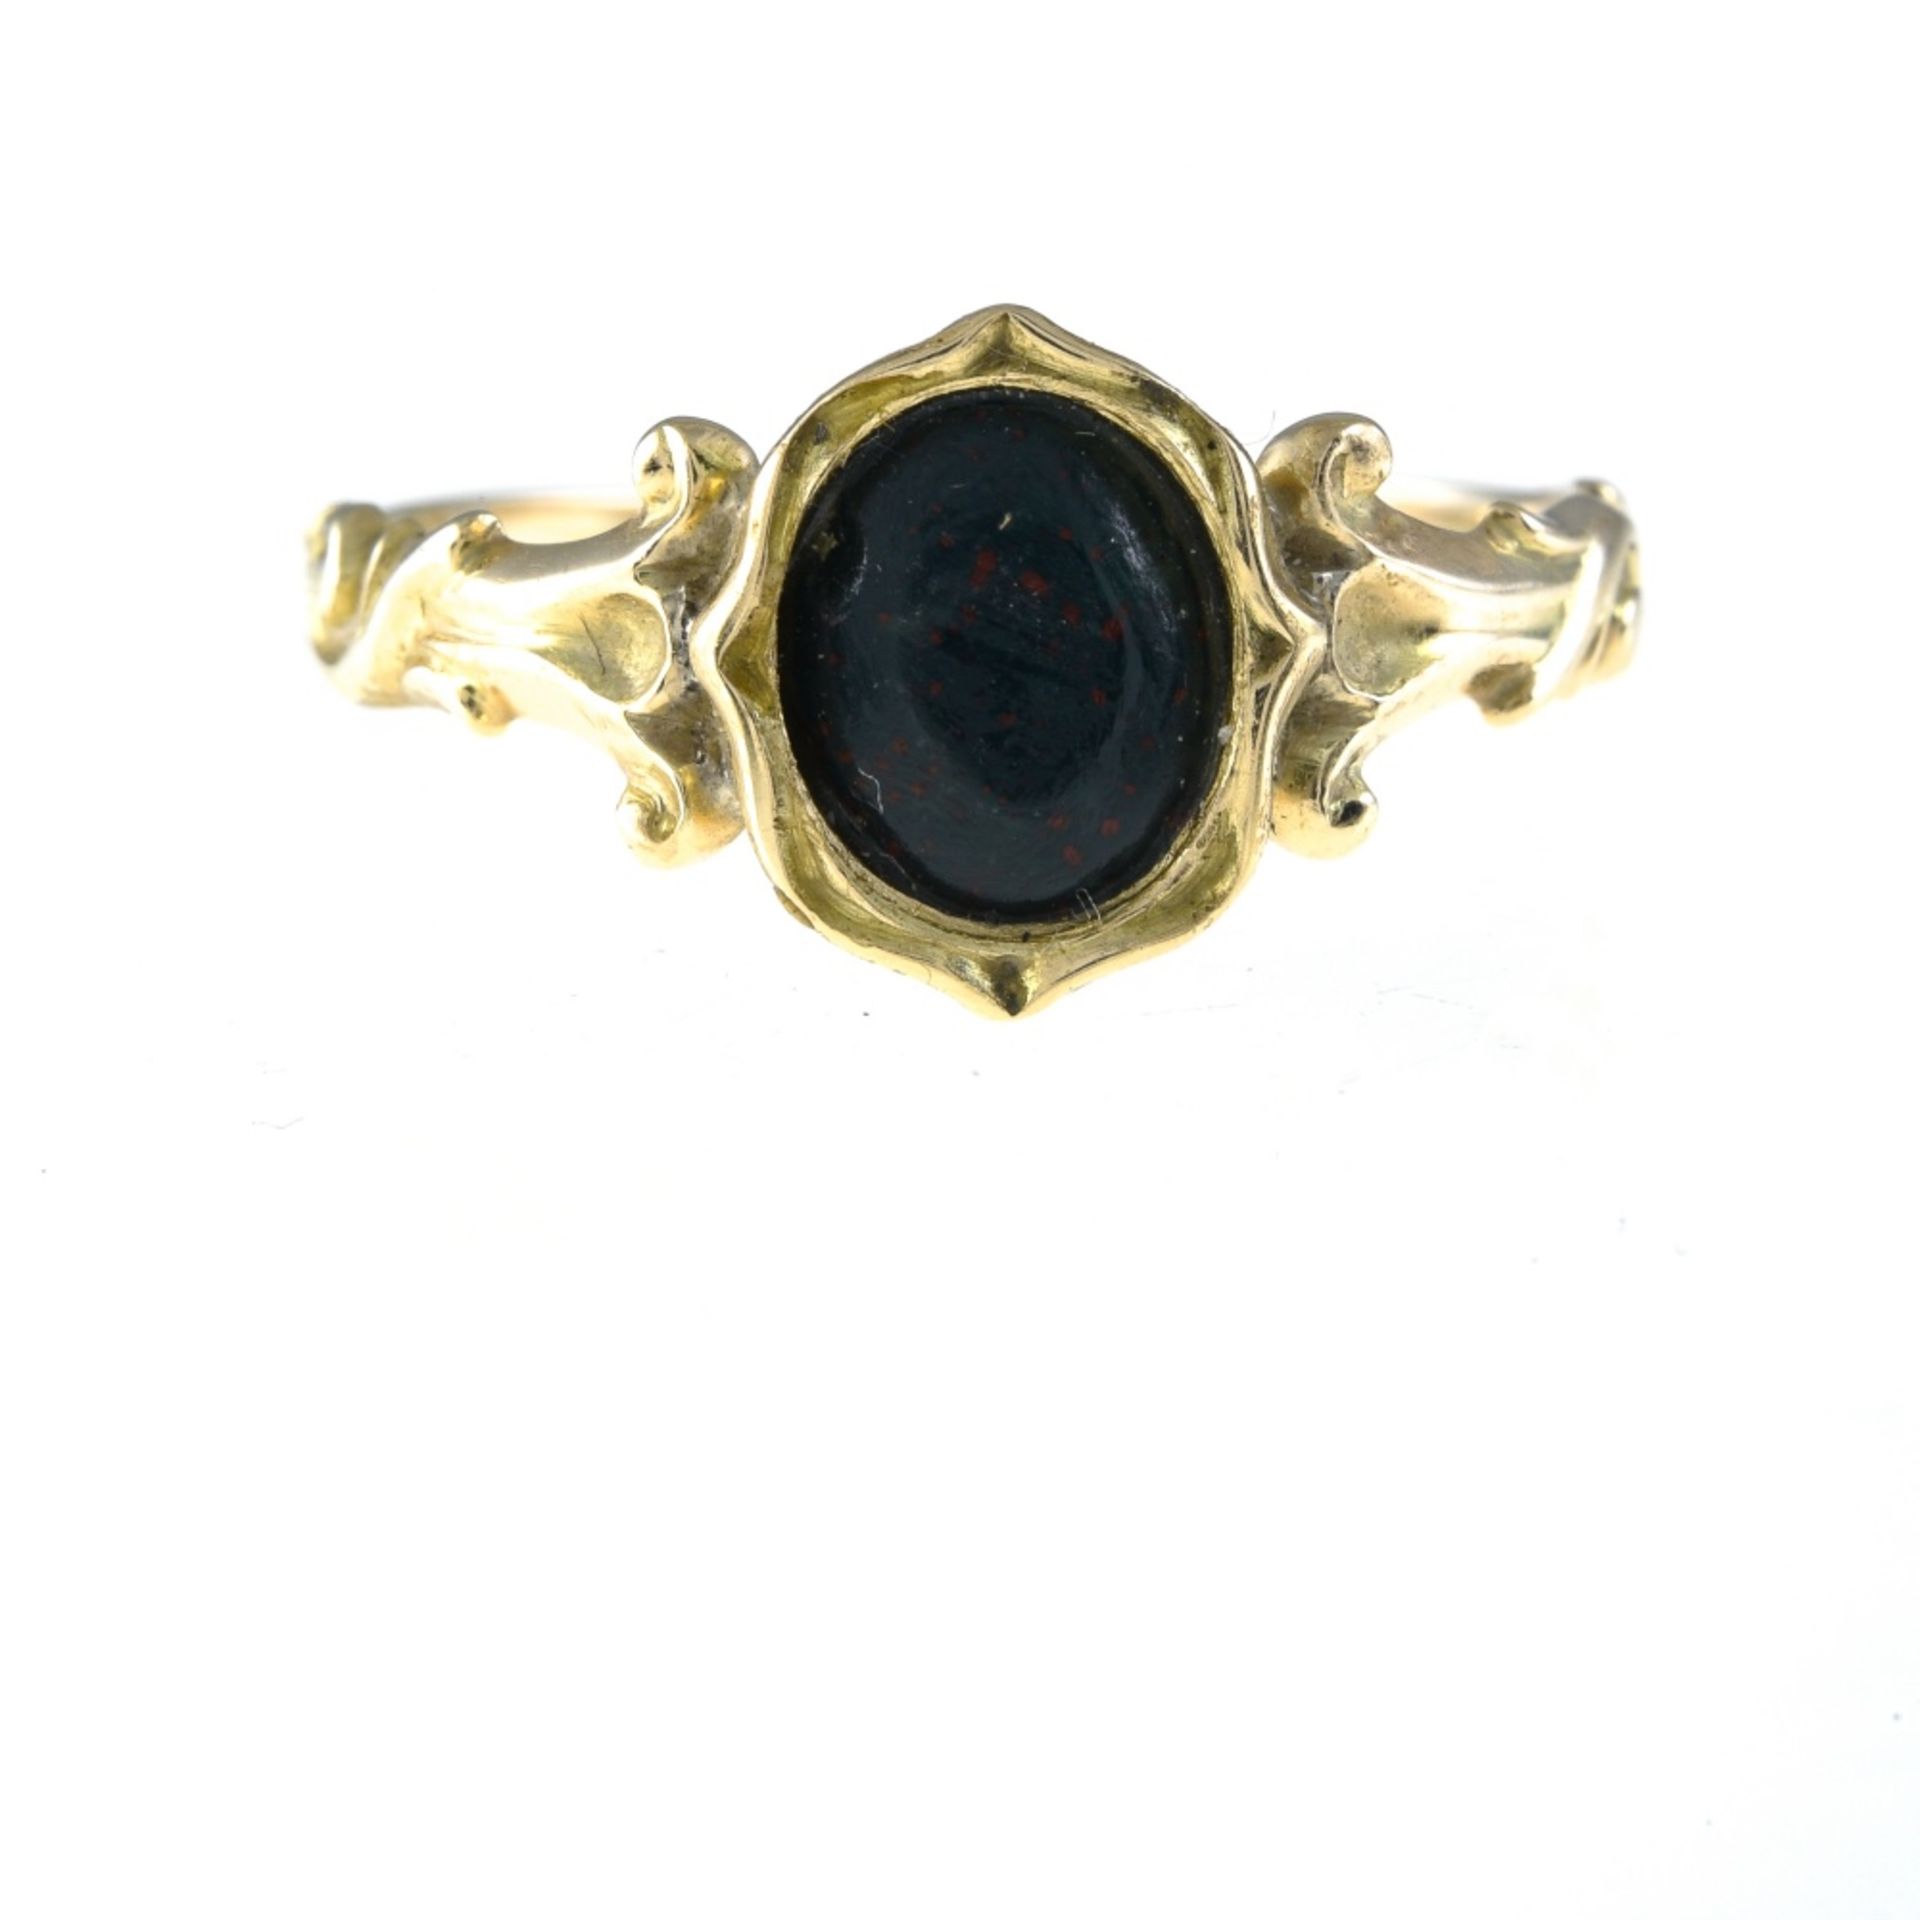 Victorian jasper ring 14 kt yellow gold, set with a bloodstone. Late 19th century work. Hallmark: